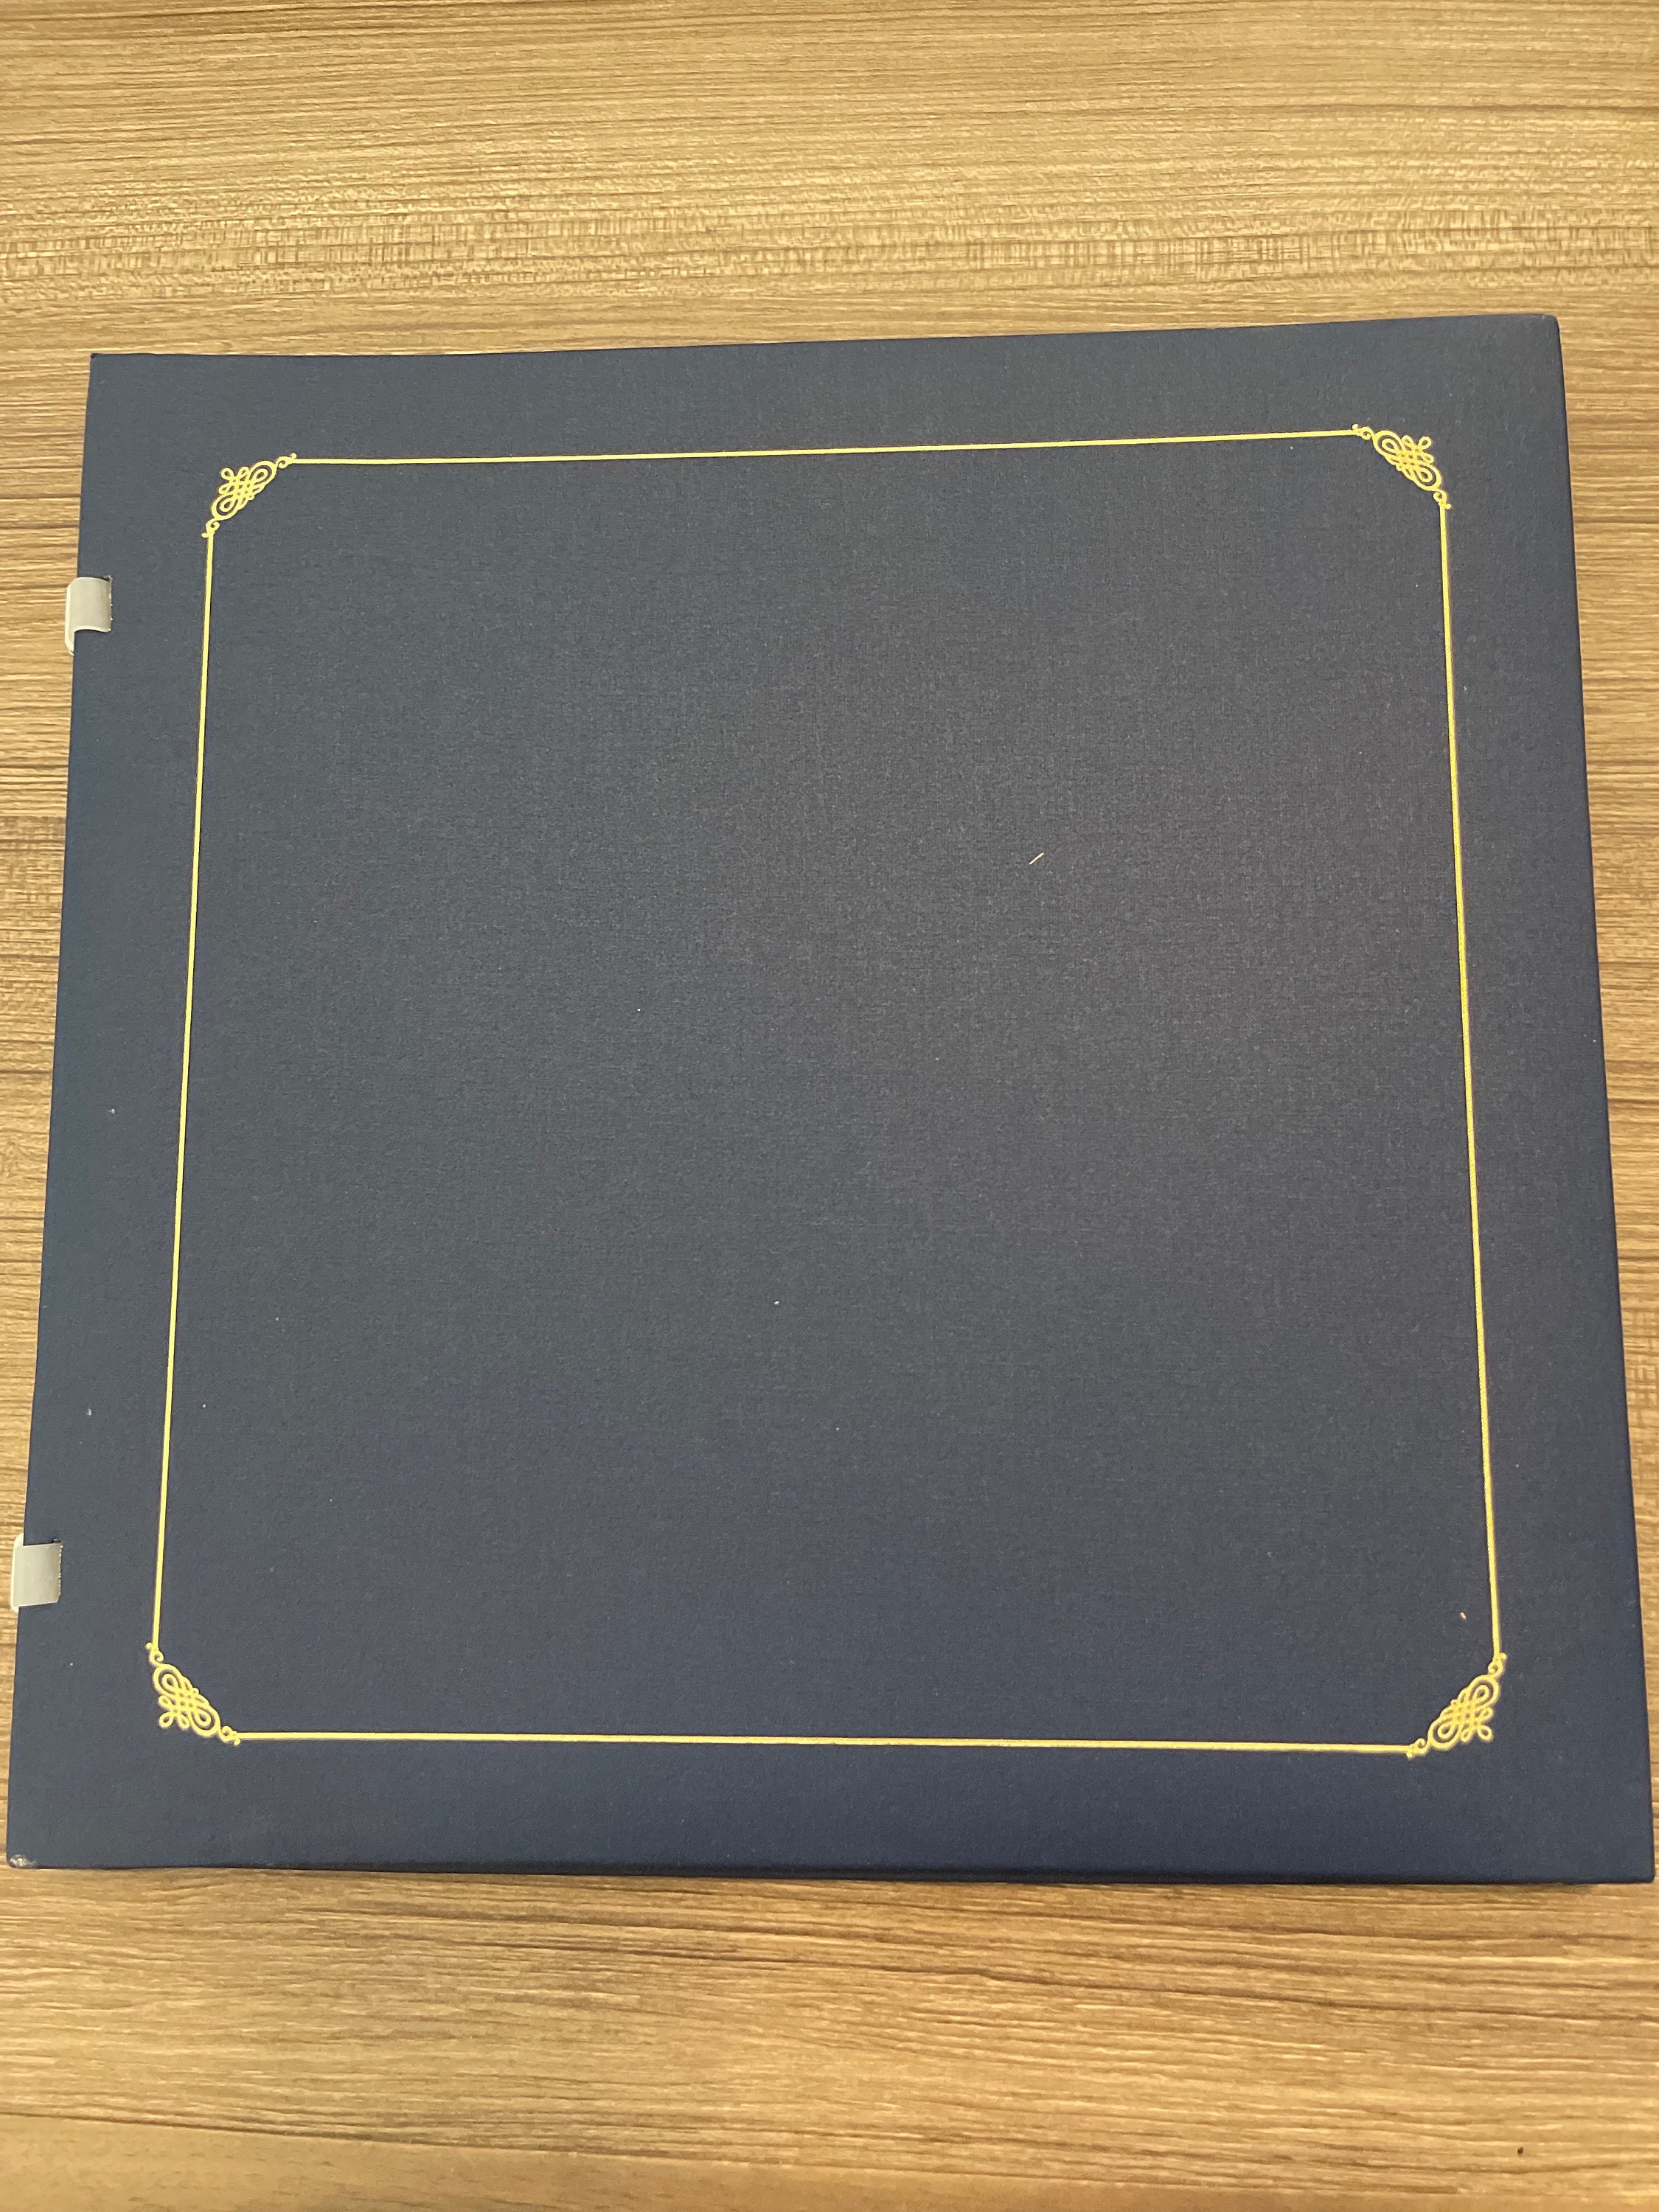 Westrim Crafts 12x12 Strap Hinge Cloth Albums Expandable Blue Green SEALED